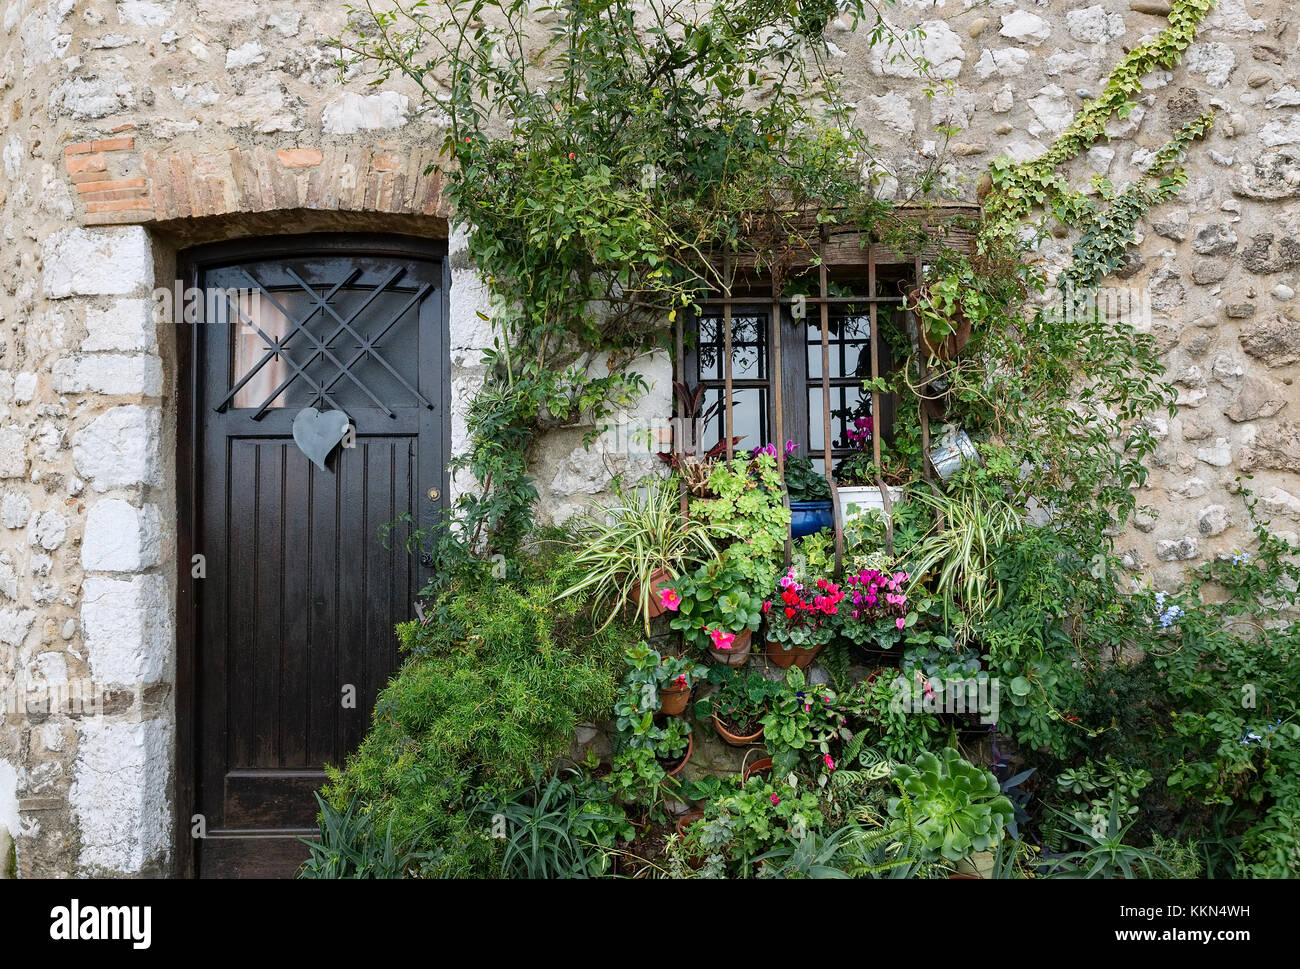 Charming house and plants, St Paul de Vence, Provance, France. Stock Photo